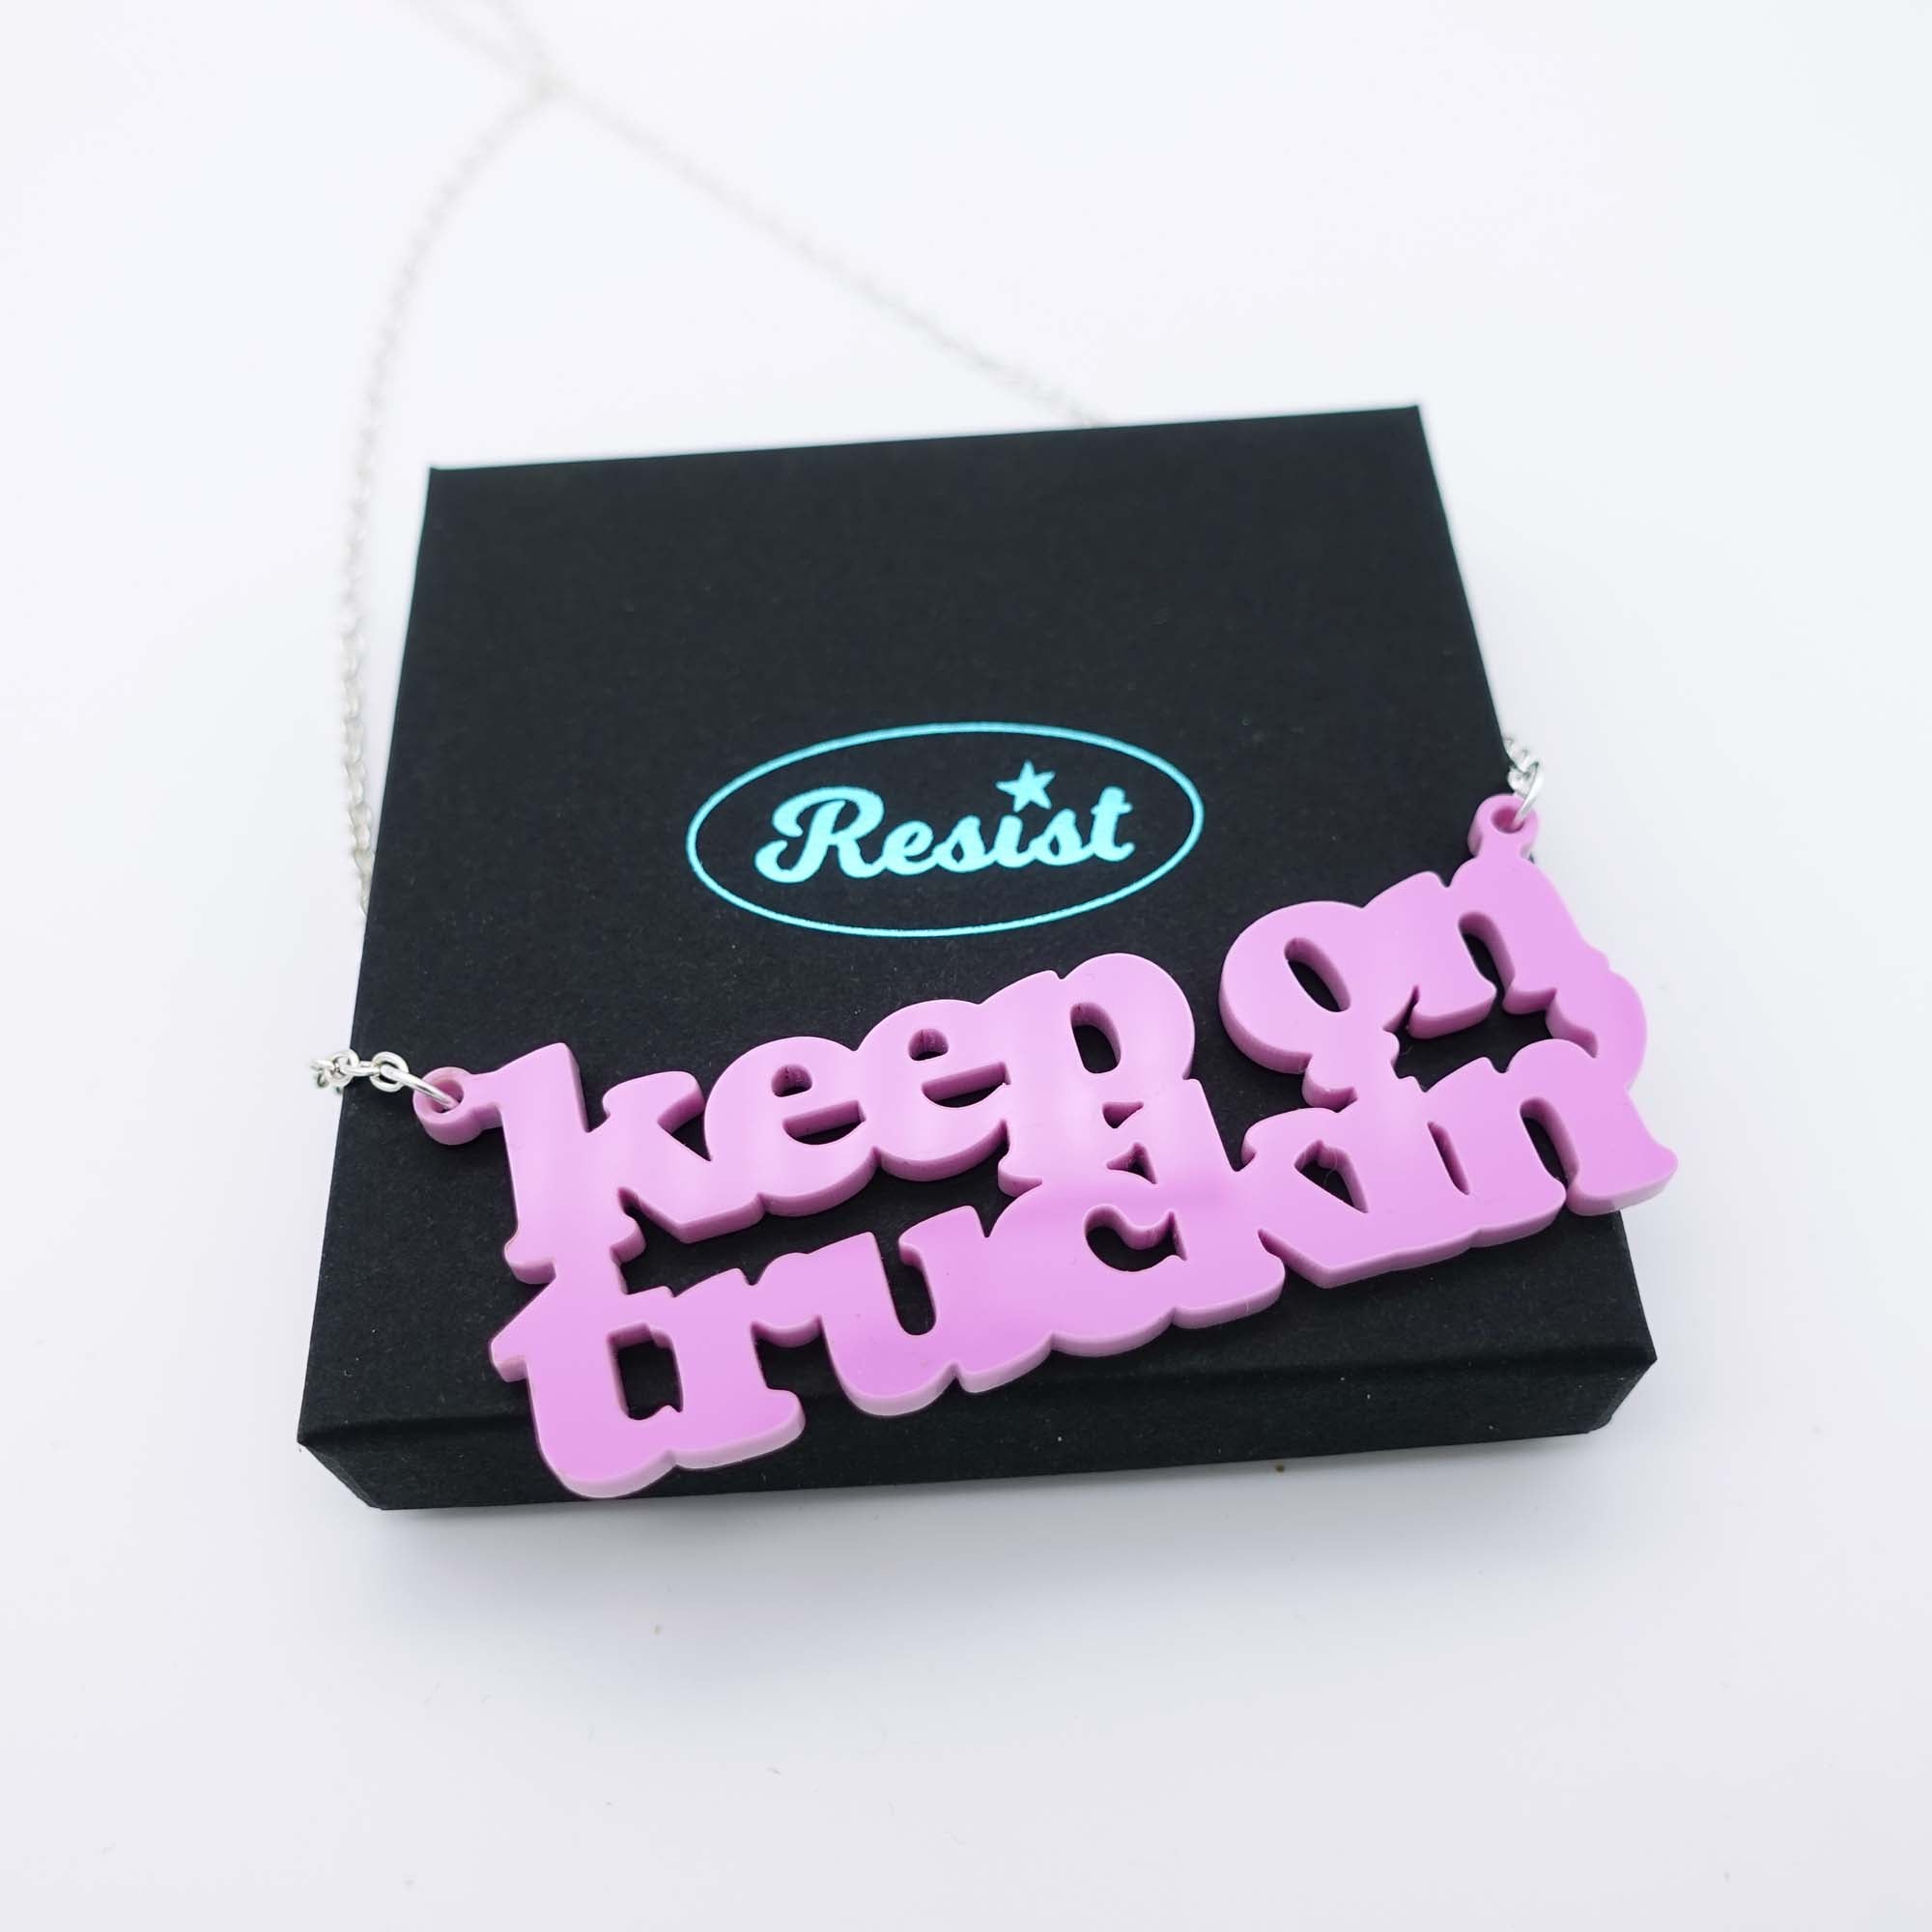 bubblegum pink Keep on Truckin' necklace shown on box